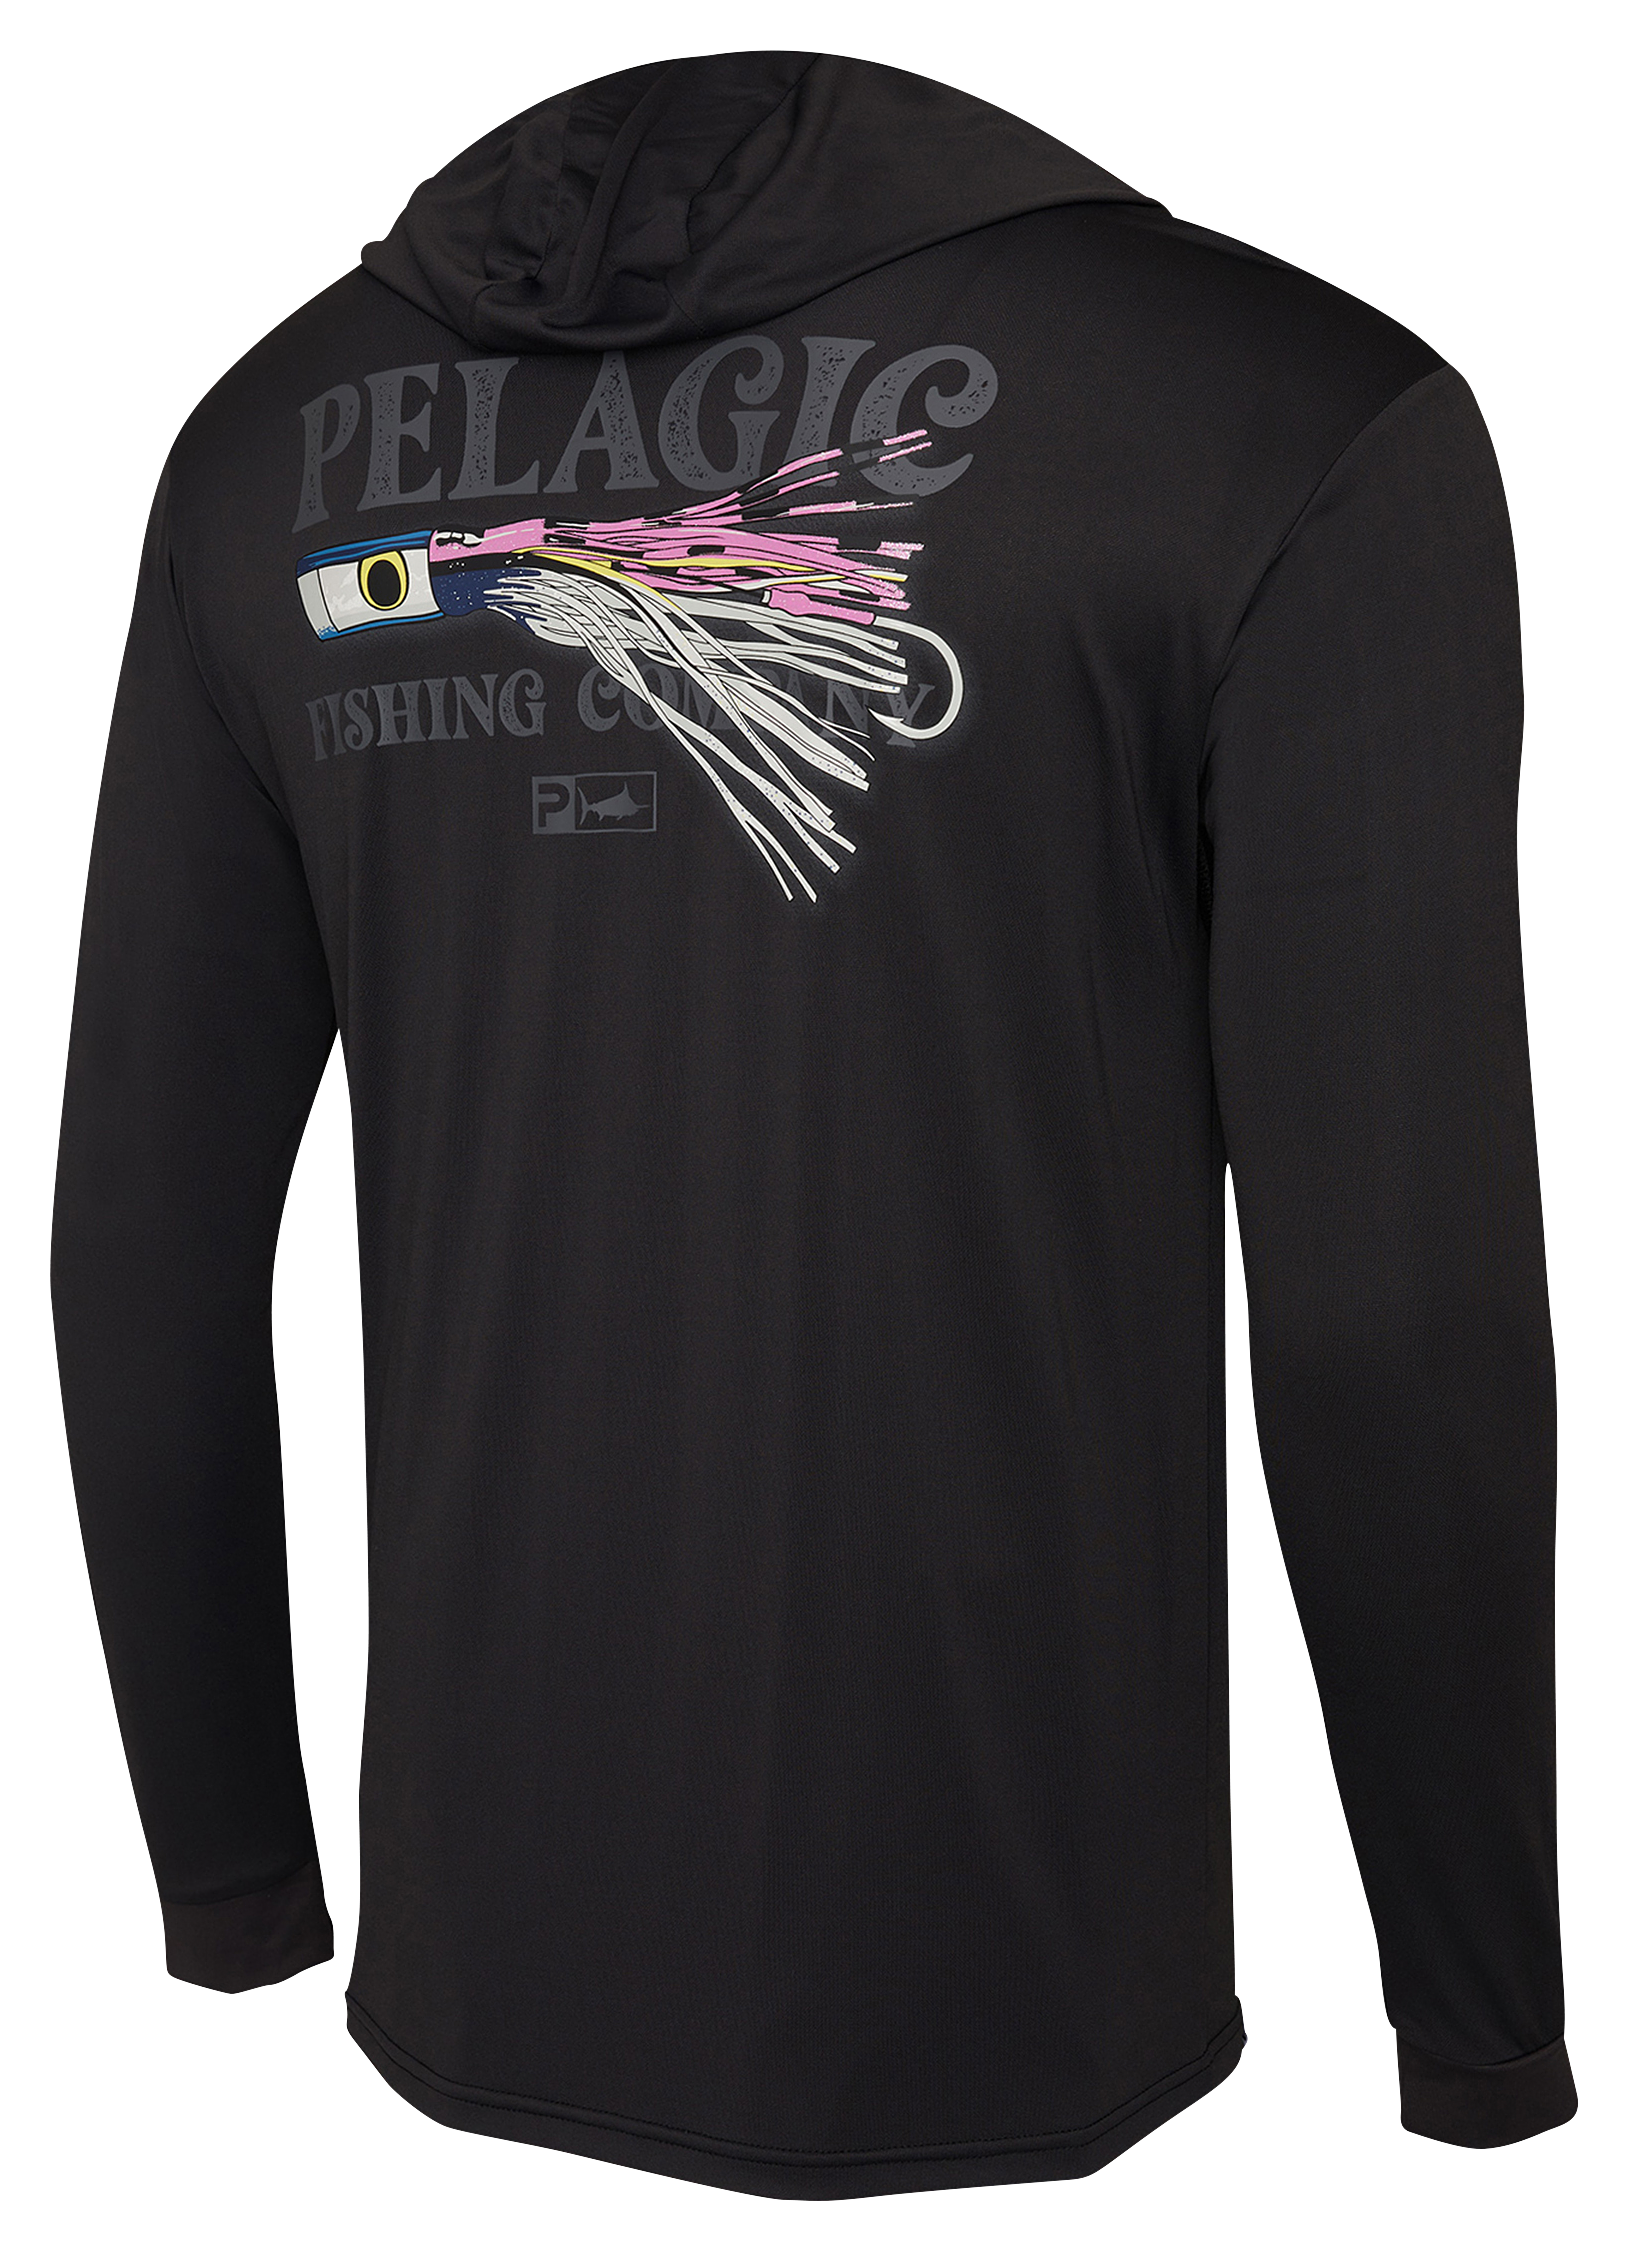 Pelagic Aquatek Lured Hooded Long-Sleeve Shirt for Men - Black/Lured - L